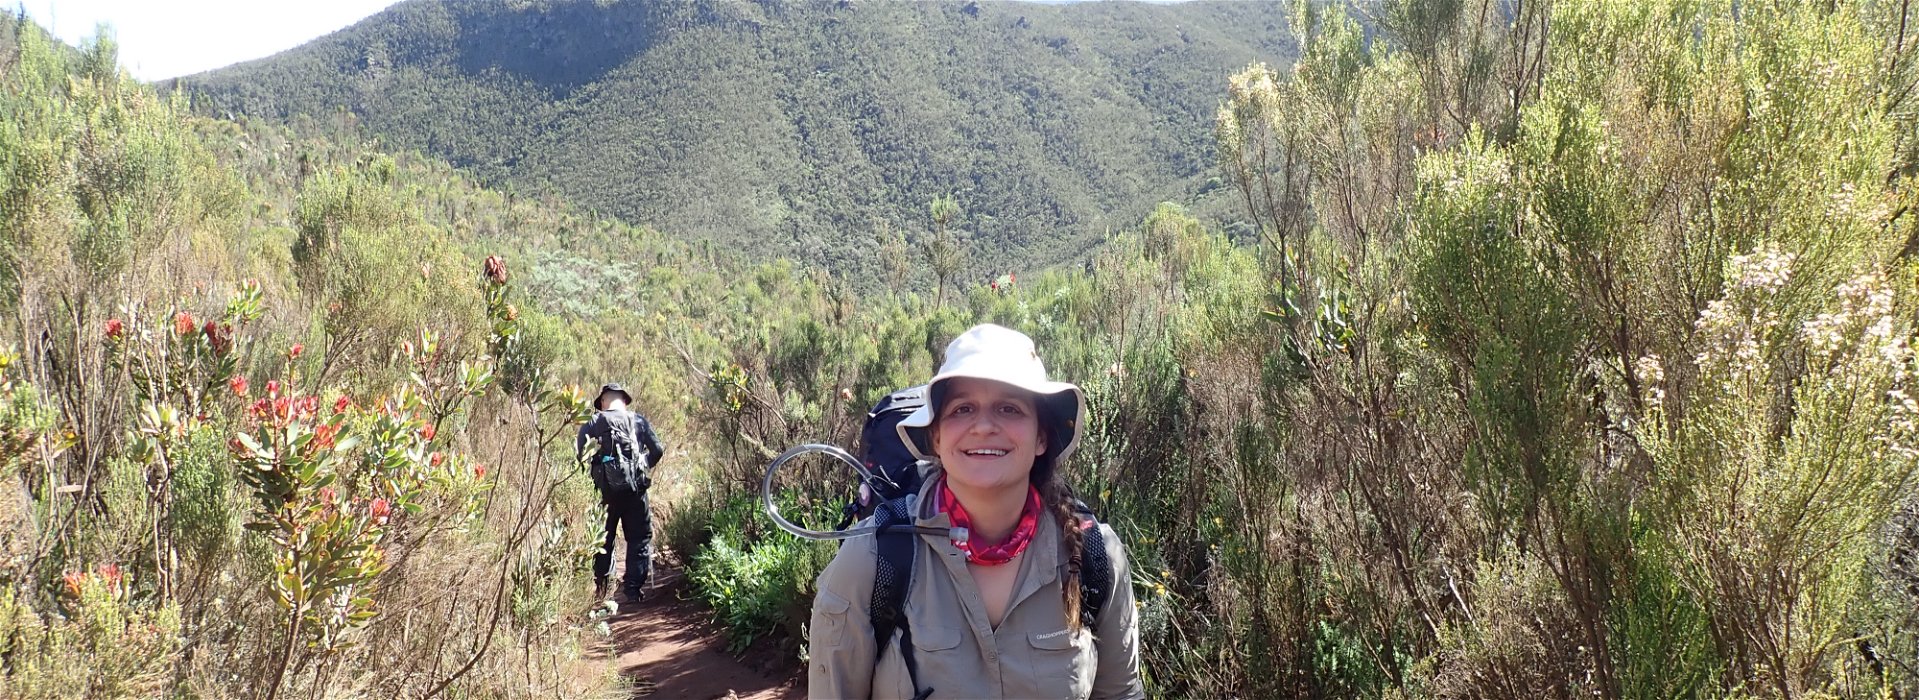 Alison's journey up Kilimanjaro